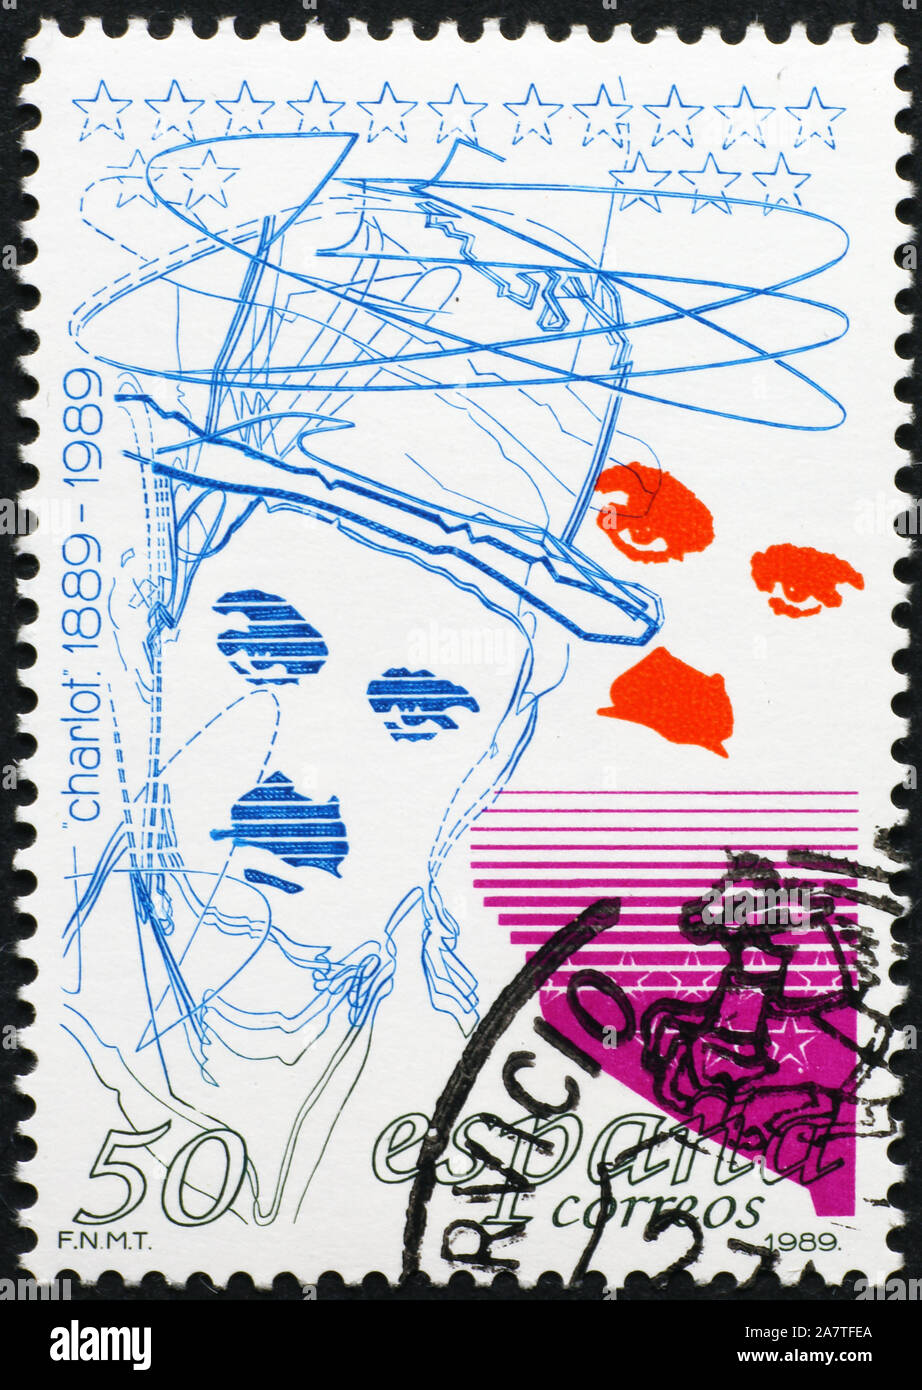 Charlot on spanish postage stamp Stock Photo